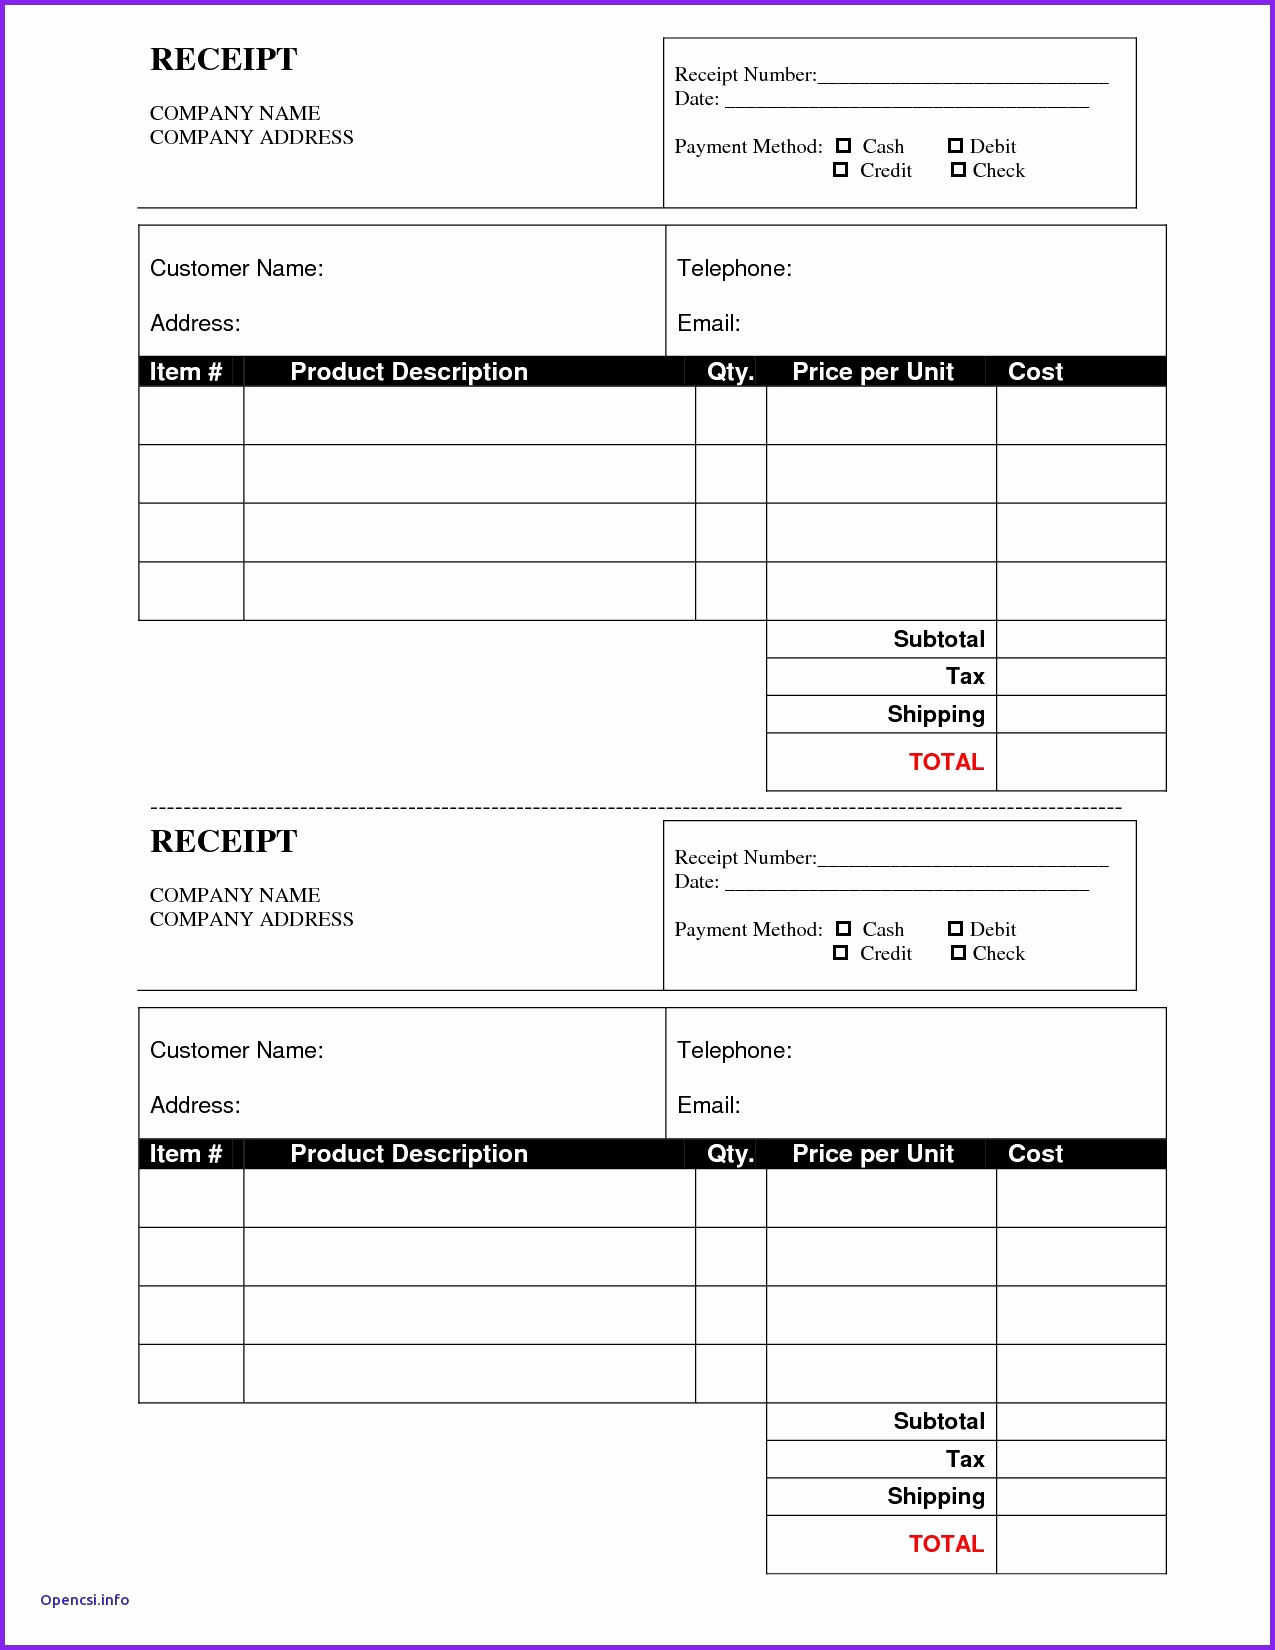 Check Stubs Free Templates Make Fake Pay Download Printable Resume - Free Printable Check Stubs Download